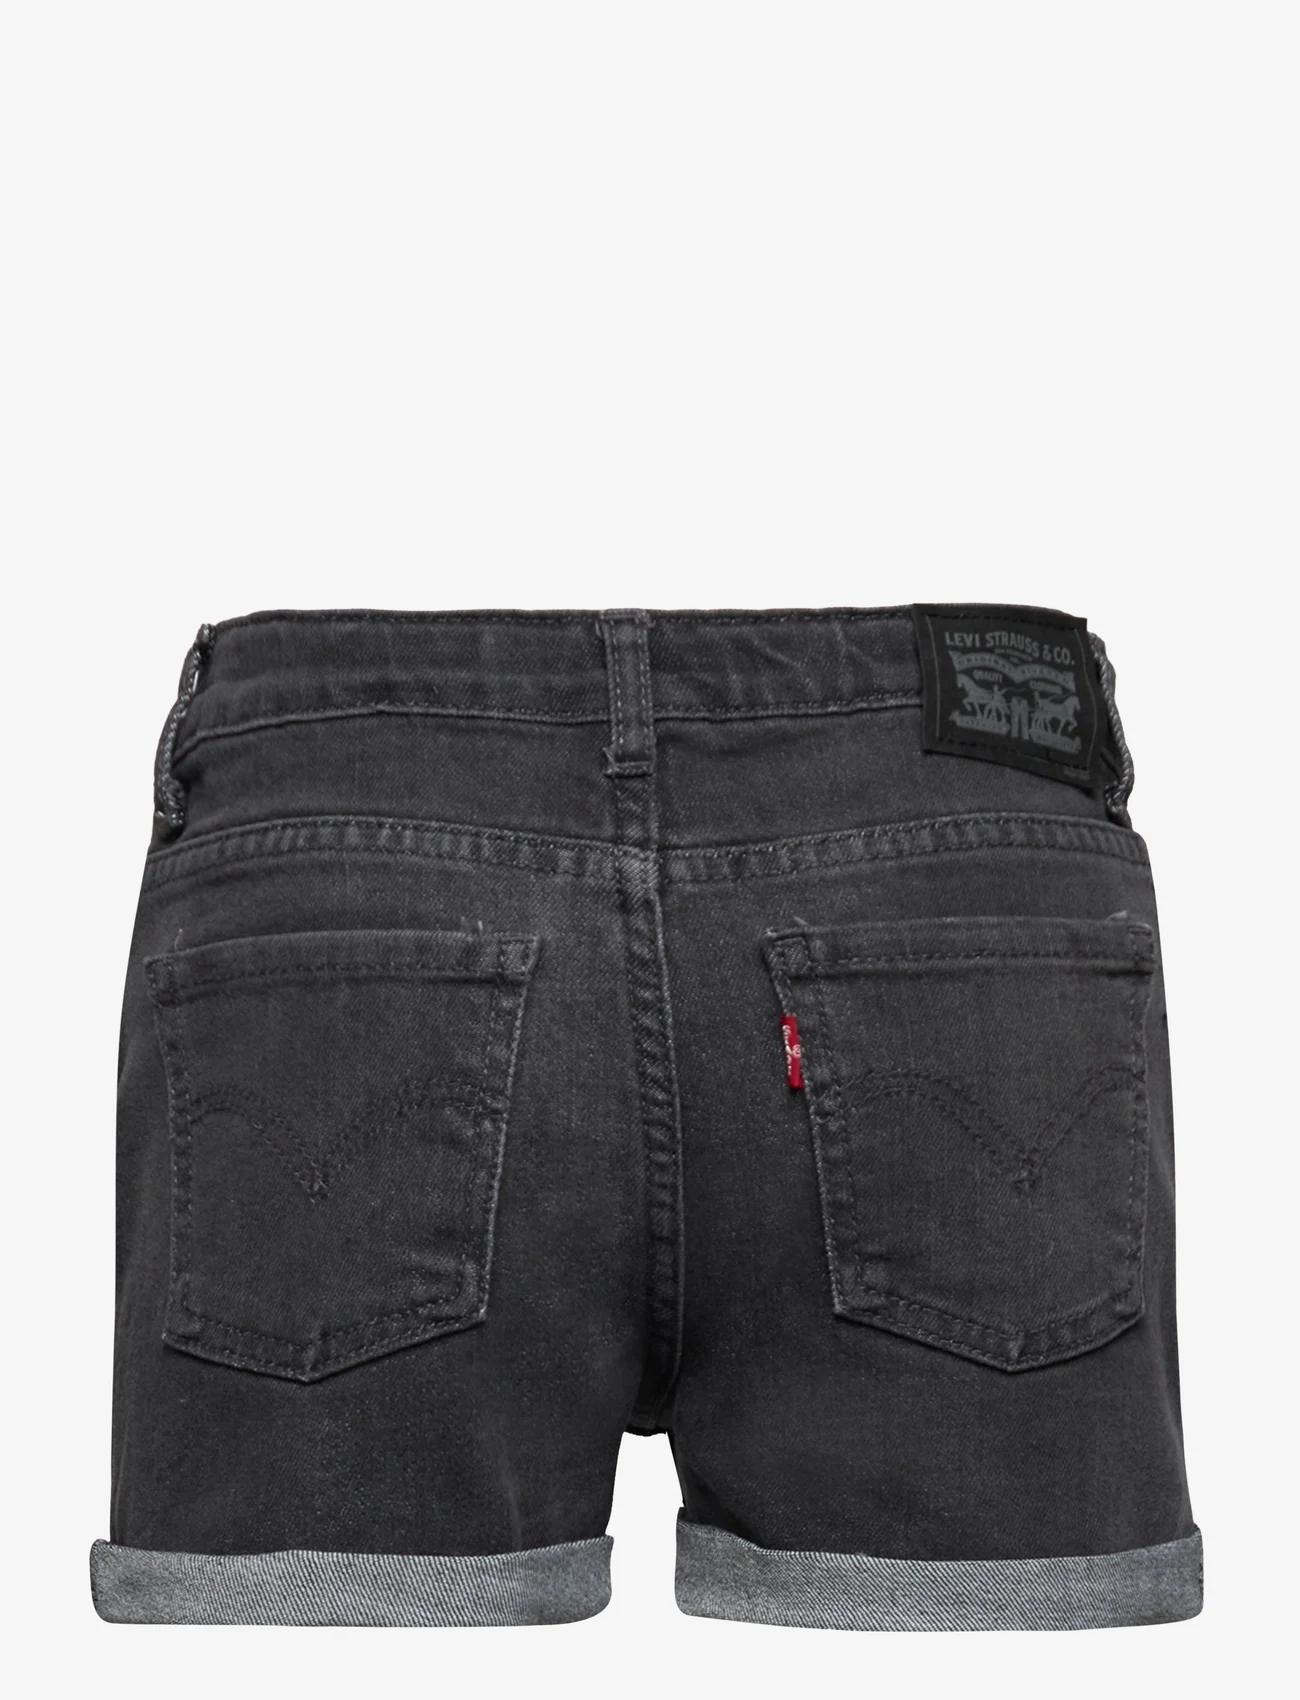 Levi's - Levi's Cuffed Girlfriend Shorts - jeansshorts - dark grey - 1